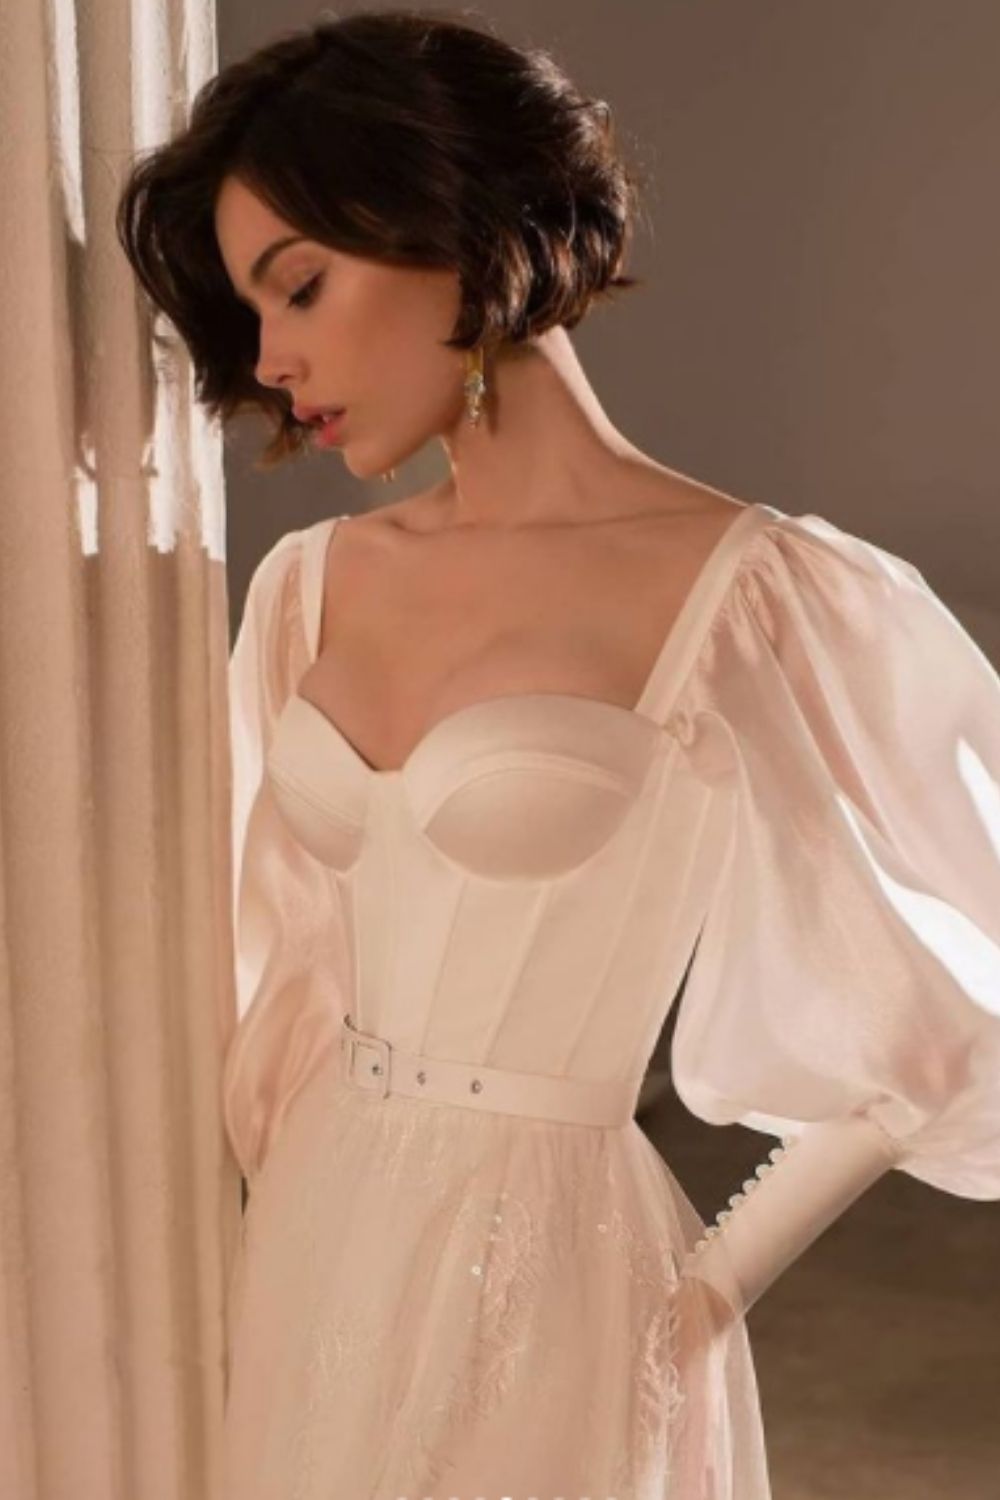 How to wear vintage wedding dress ideas?